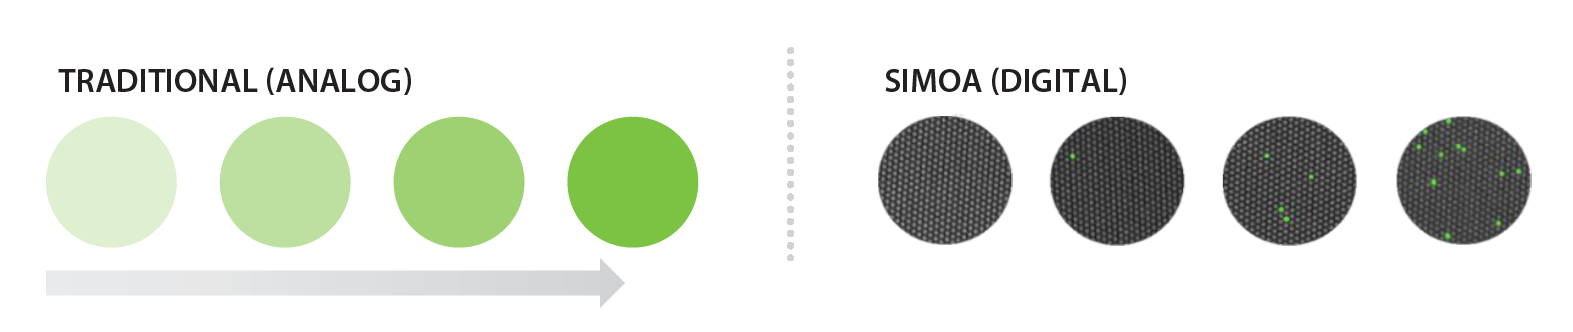 Traditional (Analog) versus Simoa (Digital)